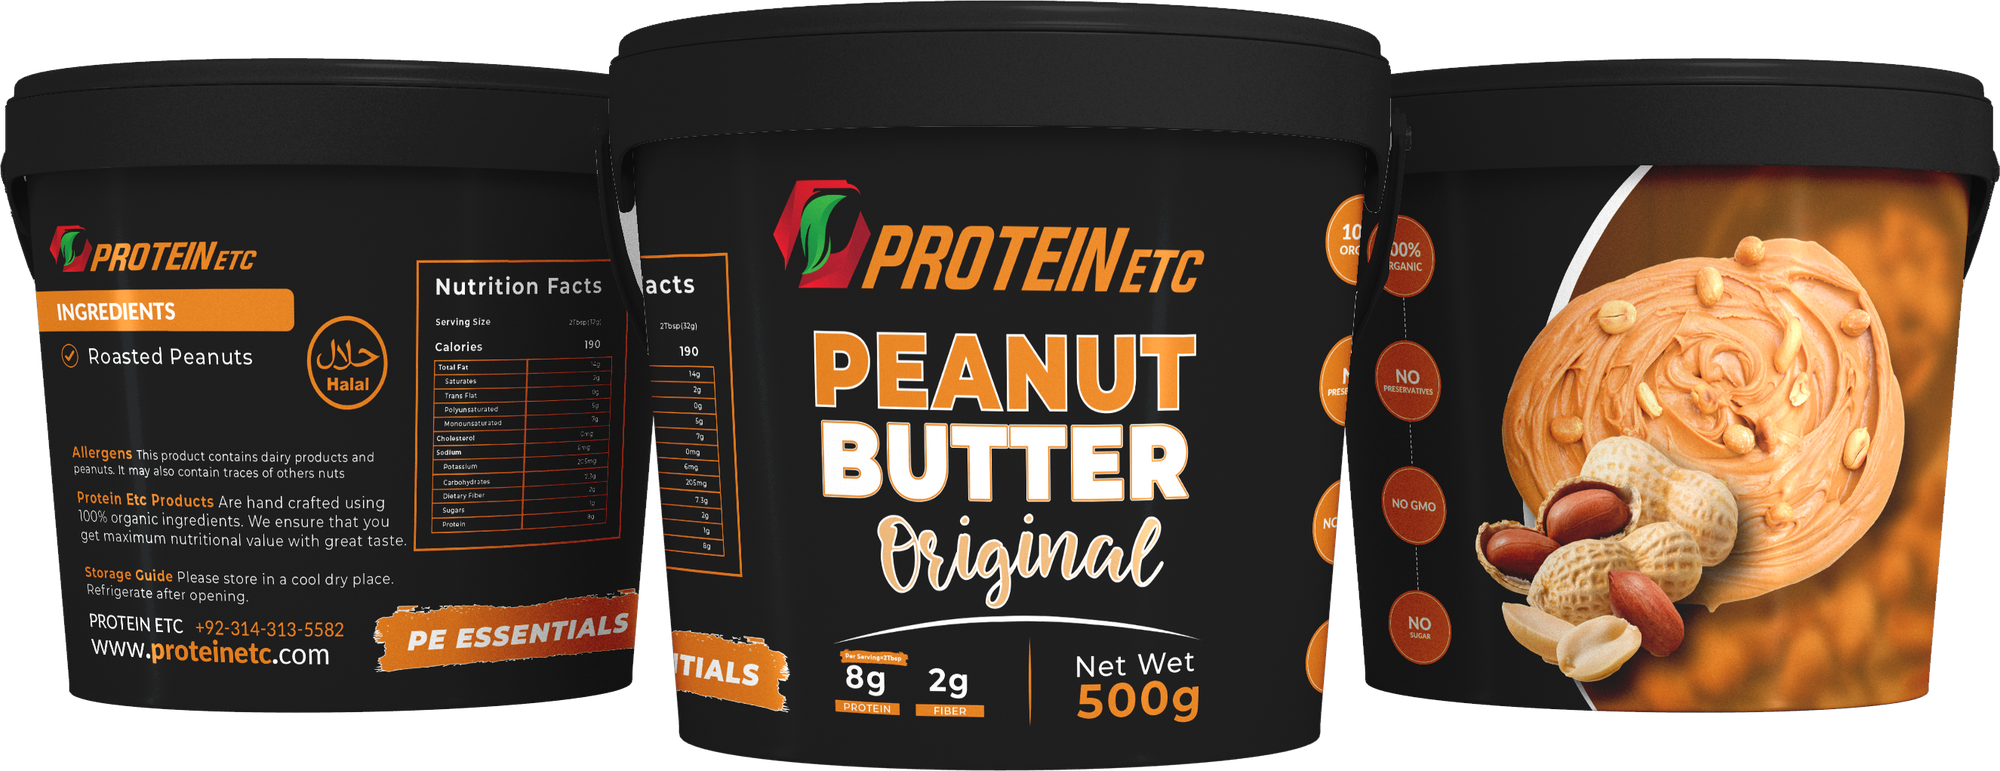 Peanut Butter Original